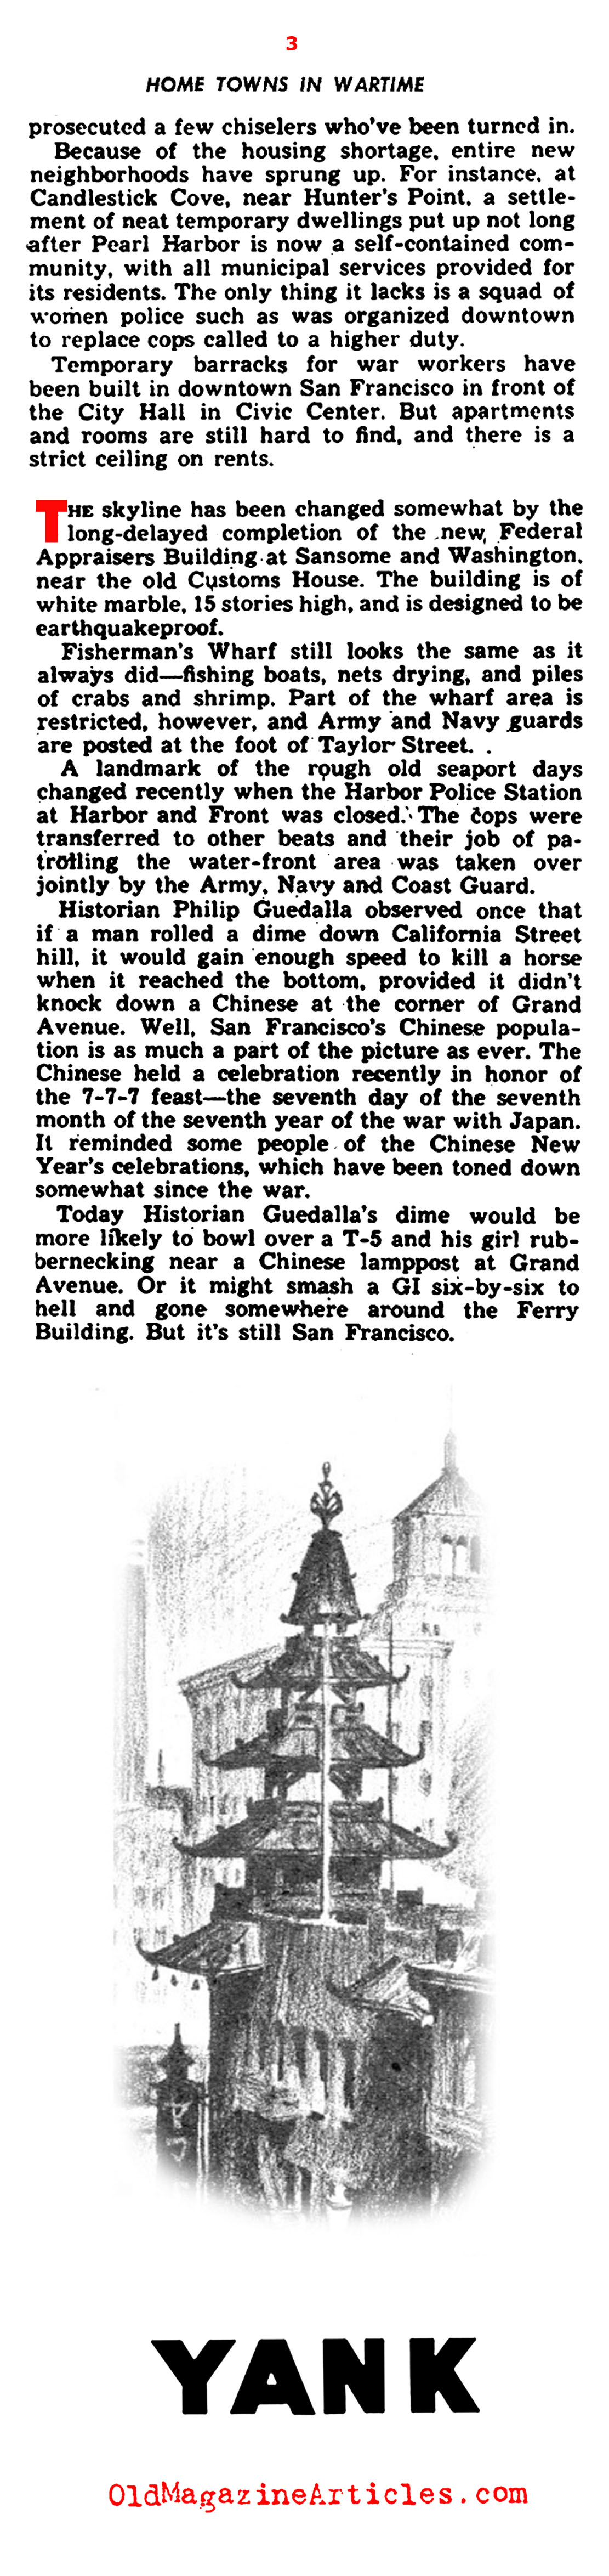 The San Francisco Home Front (Yank Magazine, 1944)